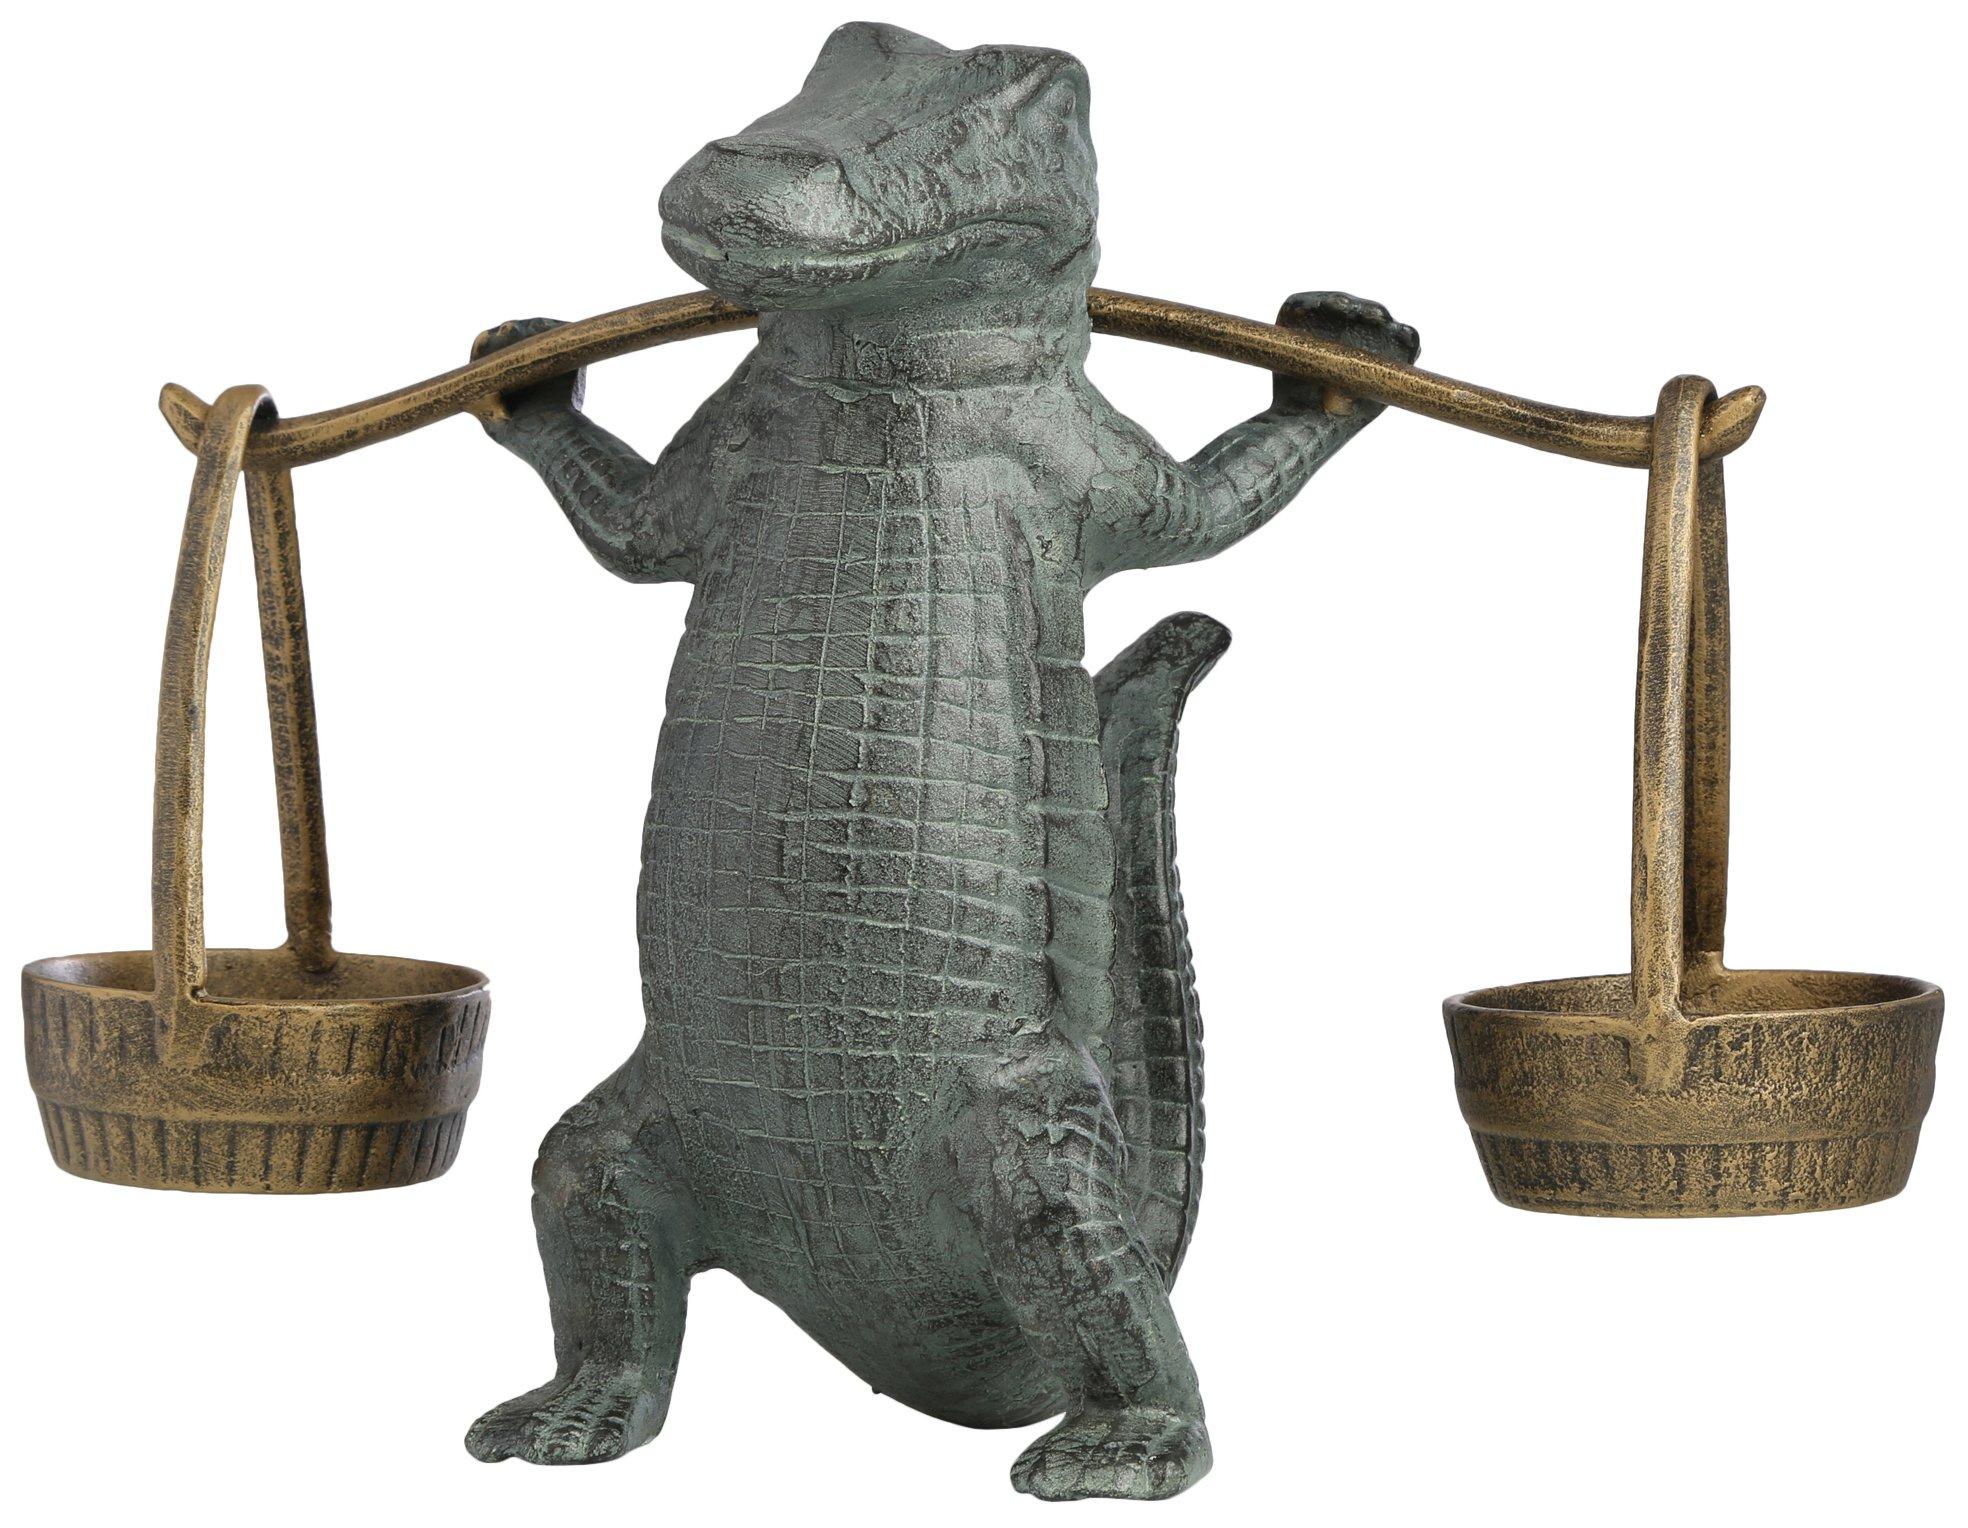 San Pacific Alligator Candle Holder Sculpture